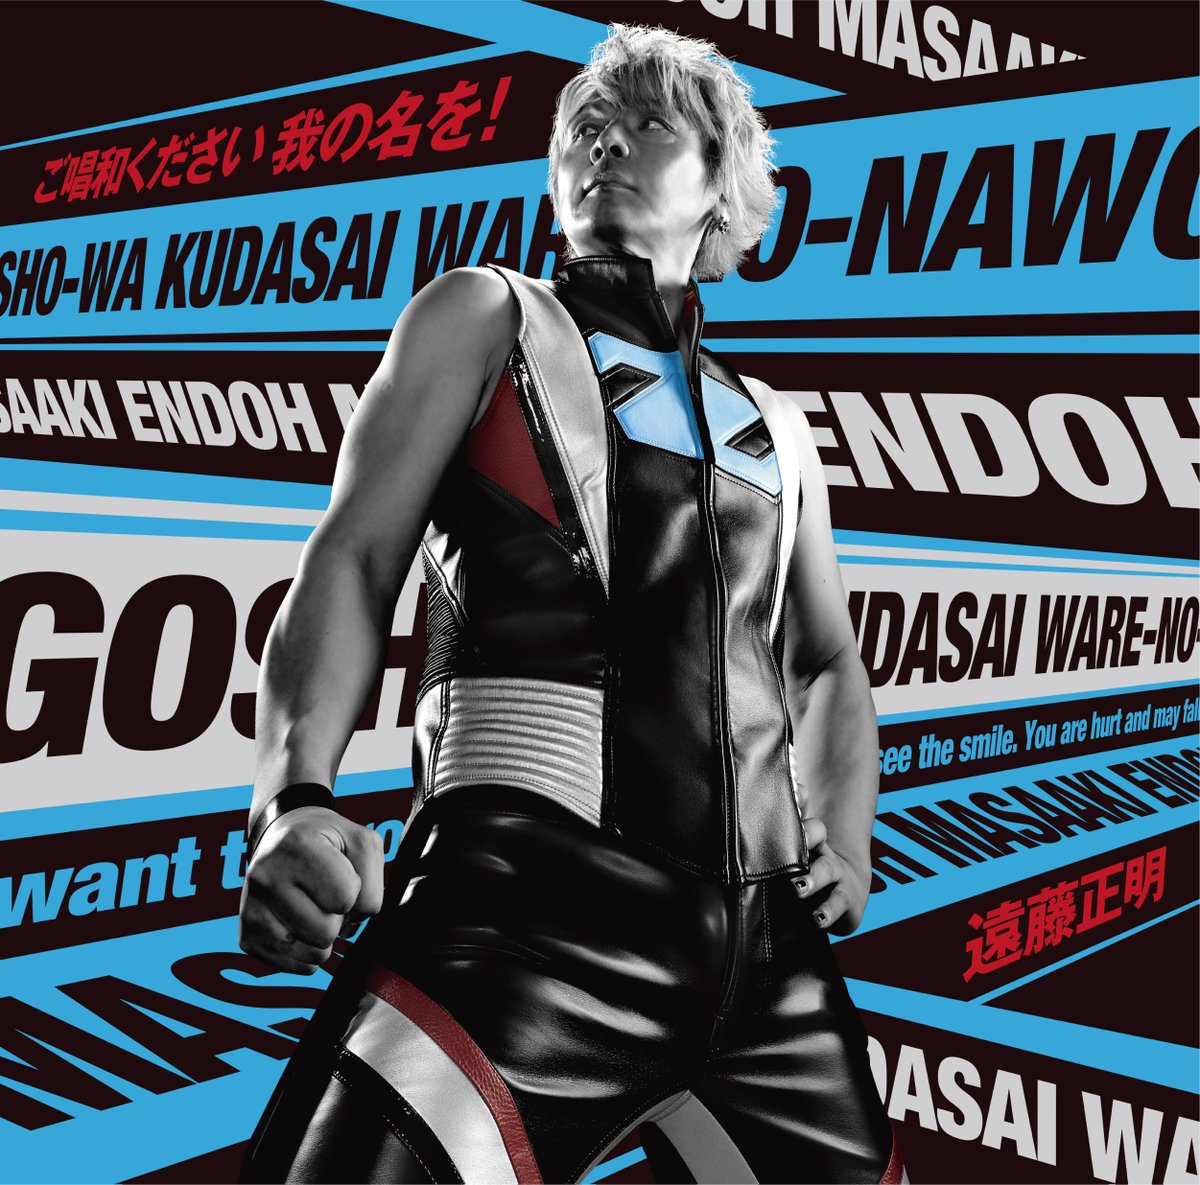 Cover art for『Masaaki Endoh - ご唱和ください 我の名を！』from the release『Goshouwa Kudasai Ware no Na wo!